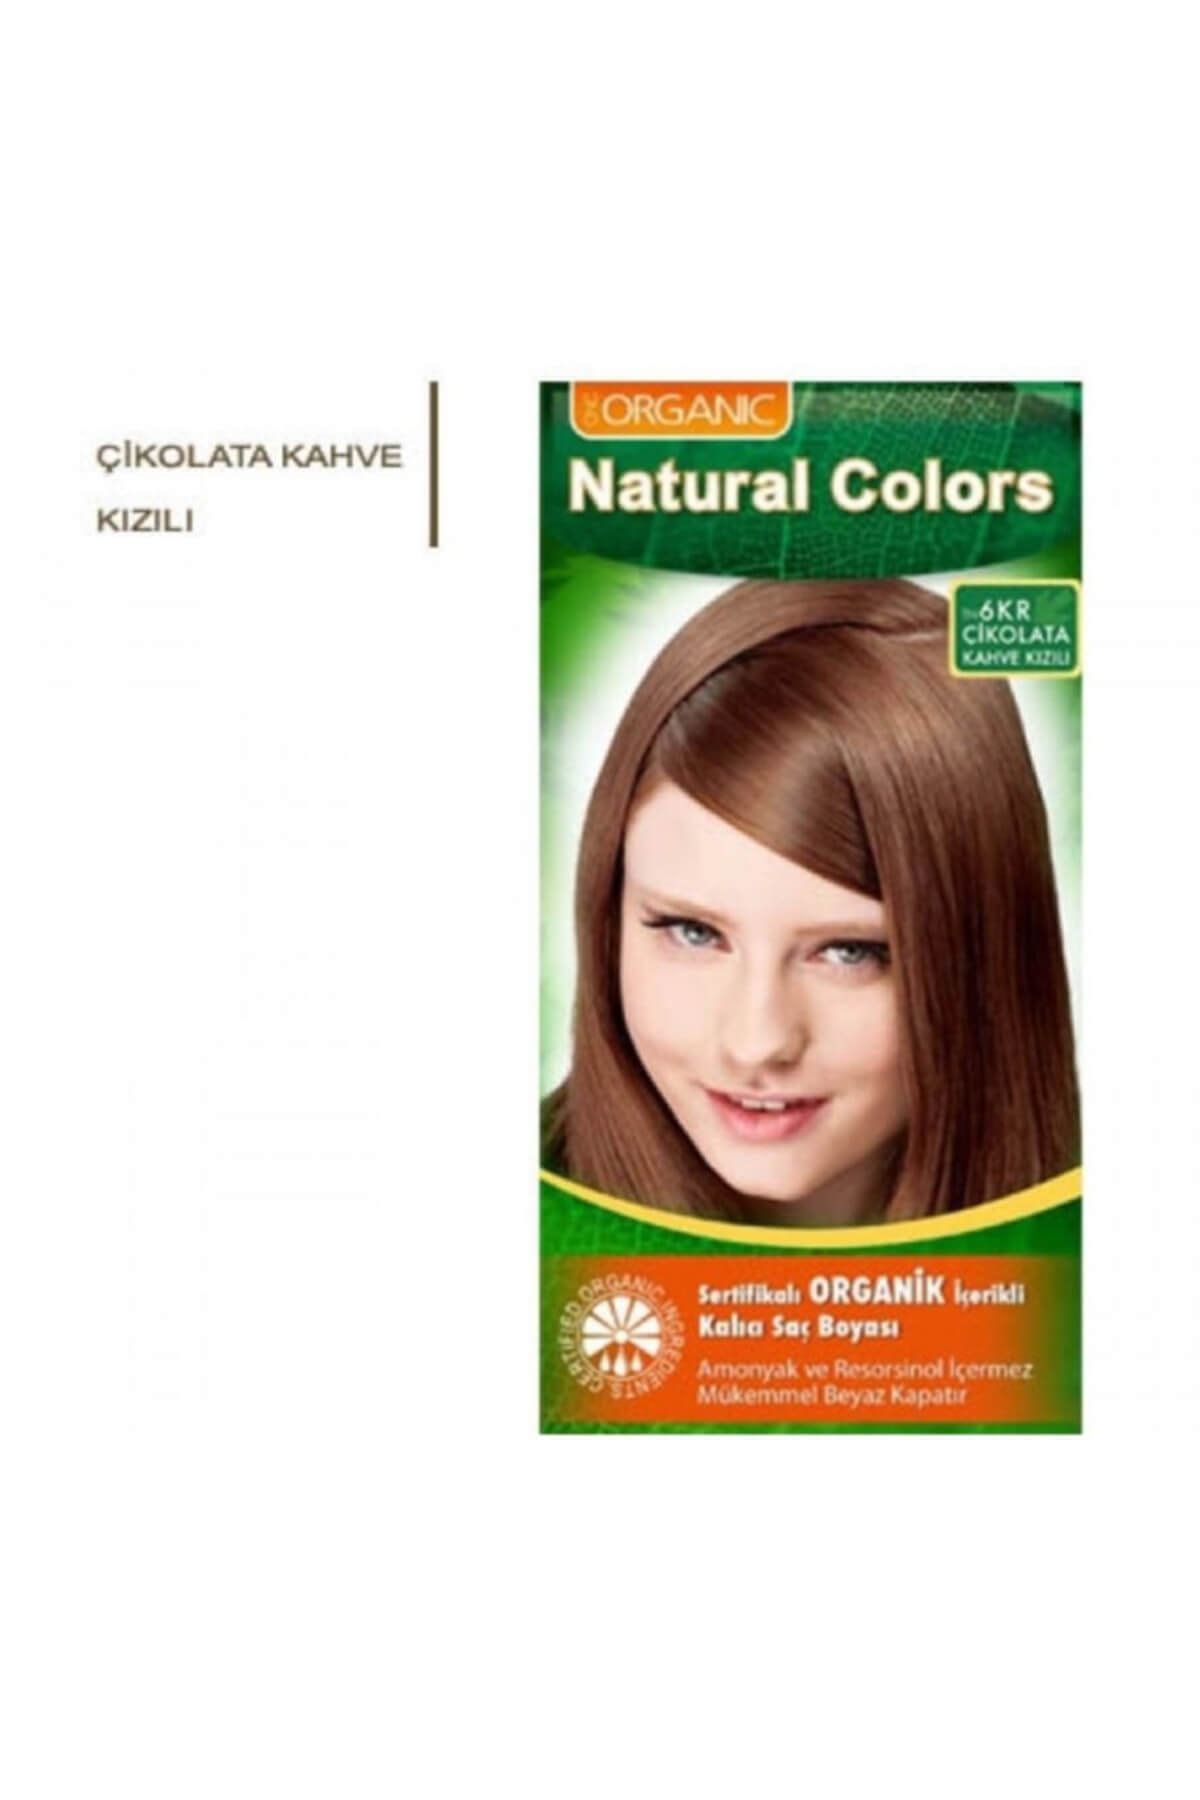 Natural Colors Saç Boyası - Çikolata Kahve Kızılı 6KR 8697722240290